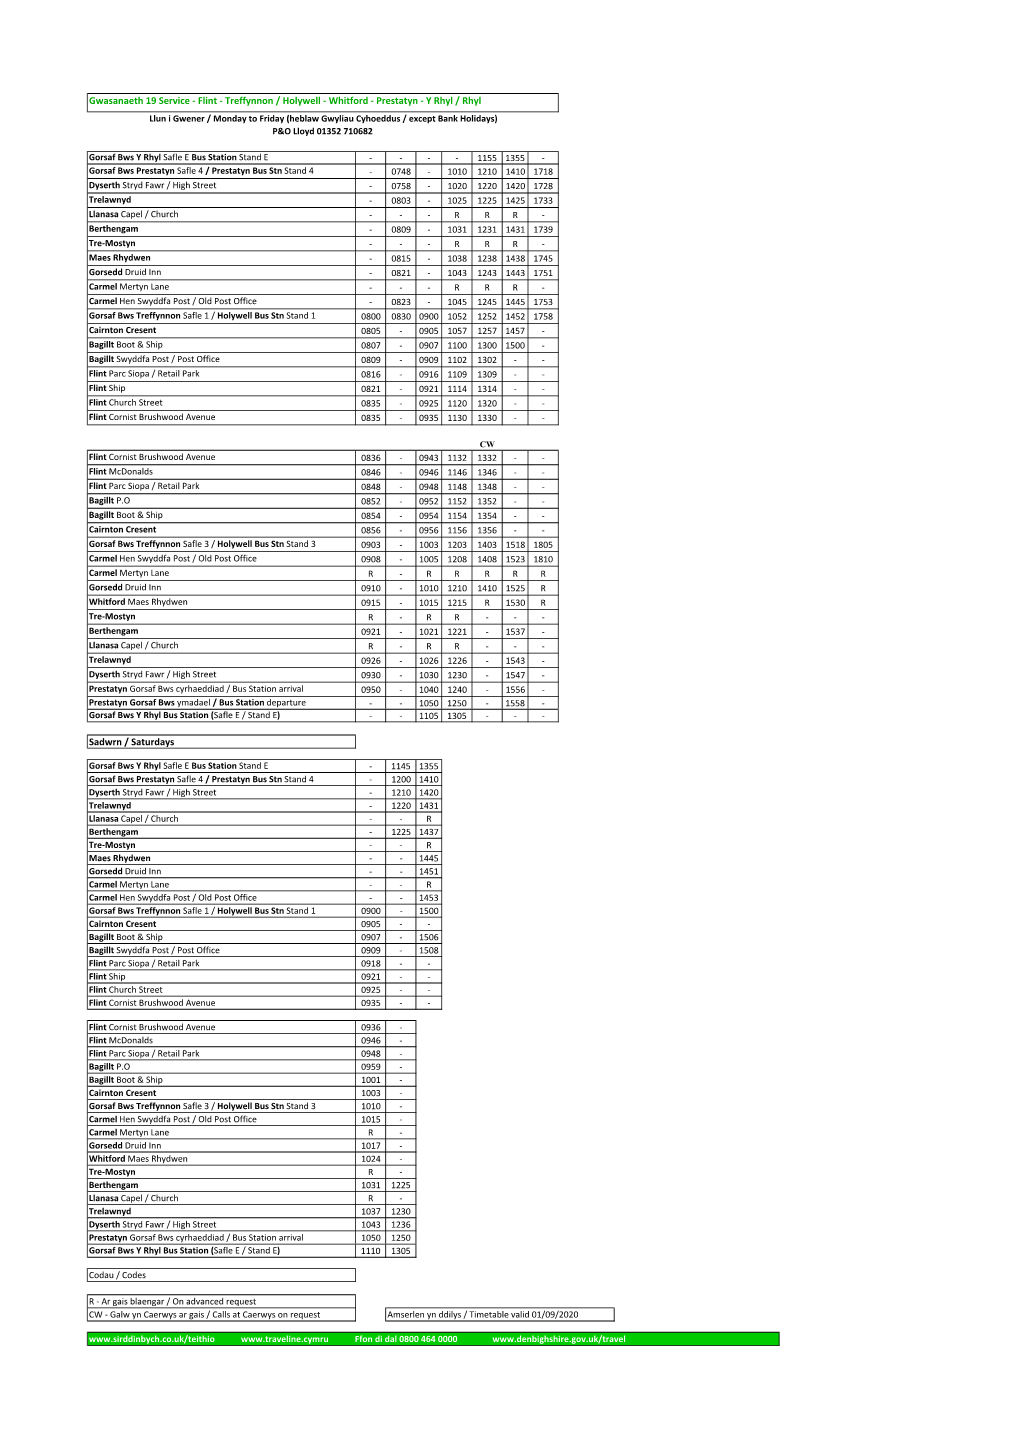 Service 19 Timetable (Flint